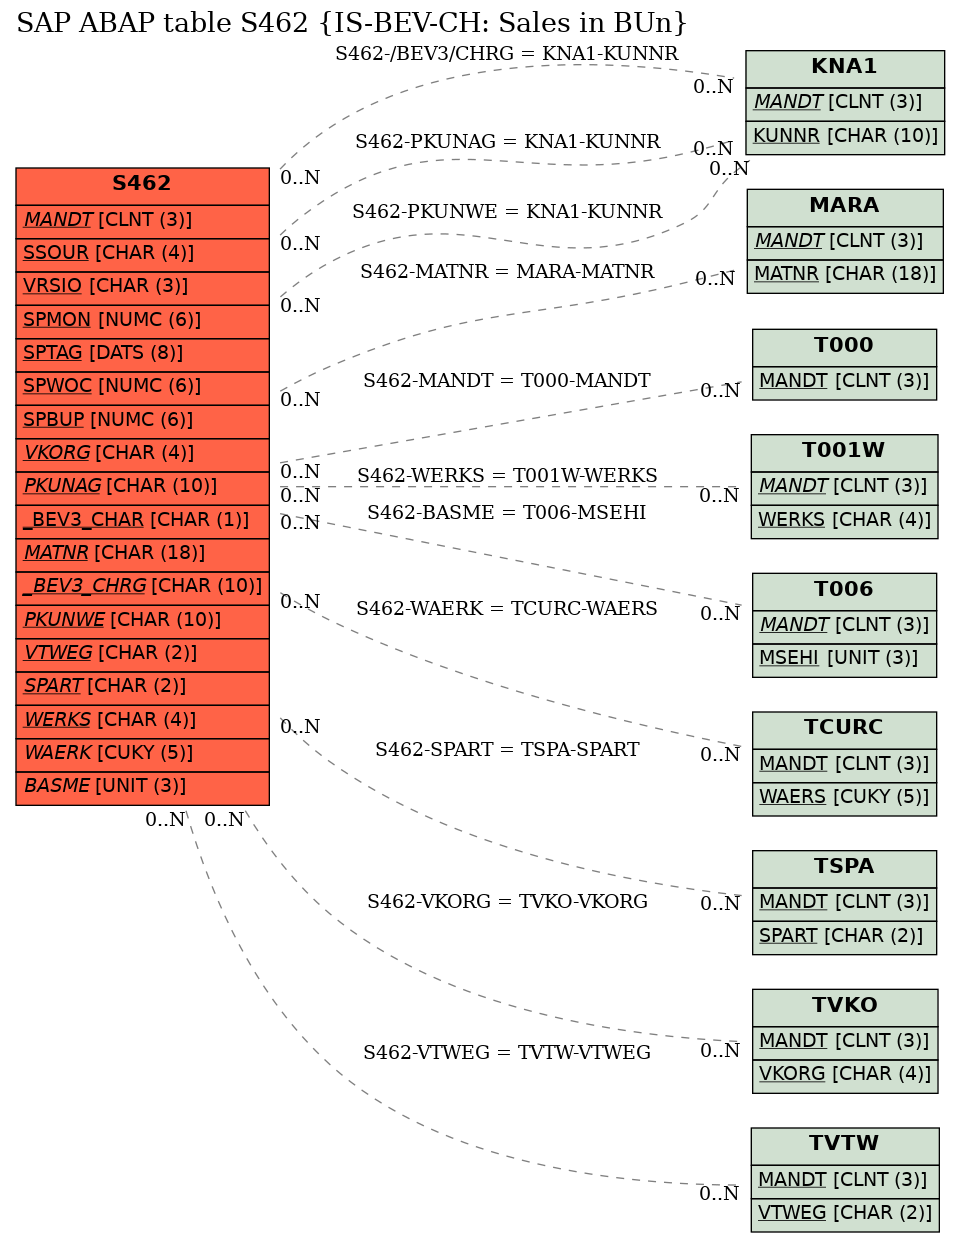 E-R Diagram for table S462 (IS-BEV-CH: Sales in BUn)